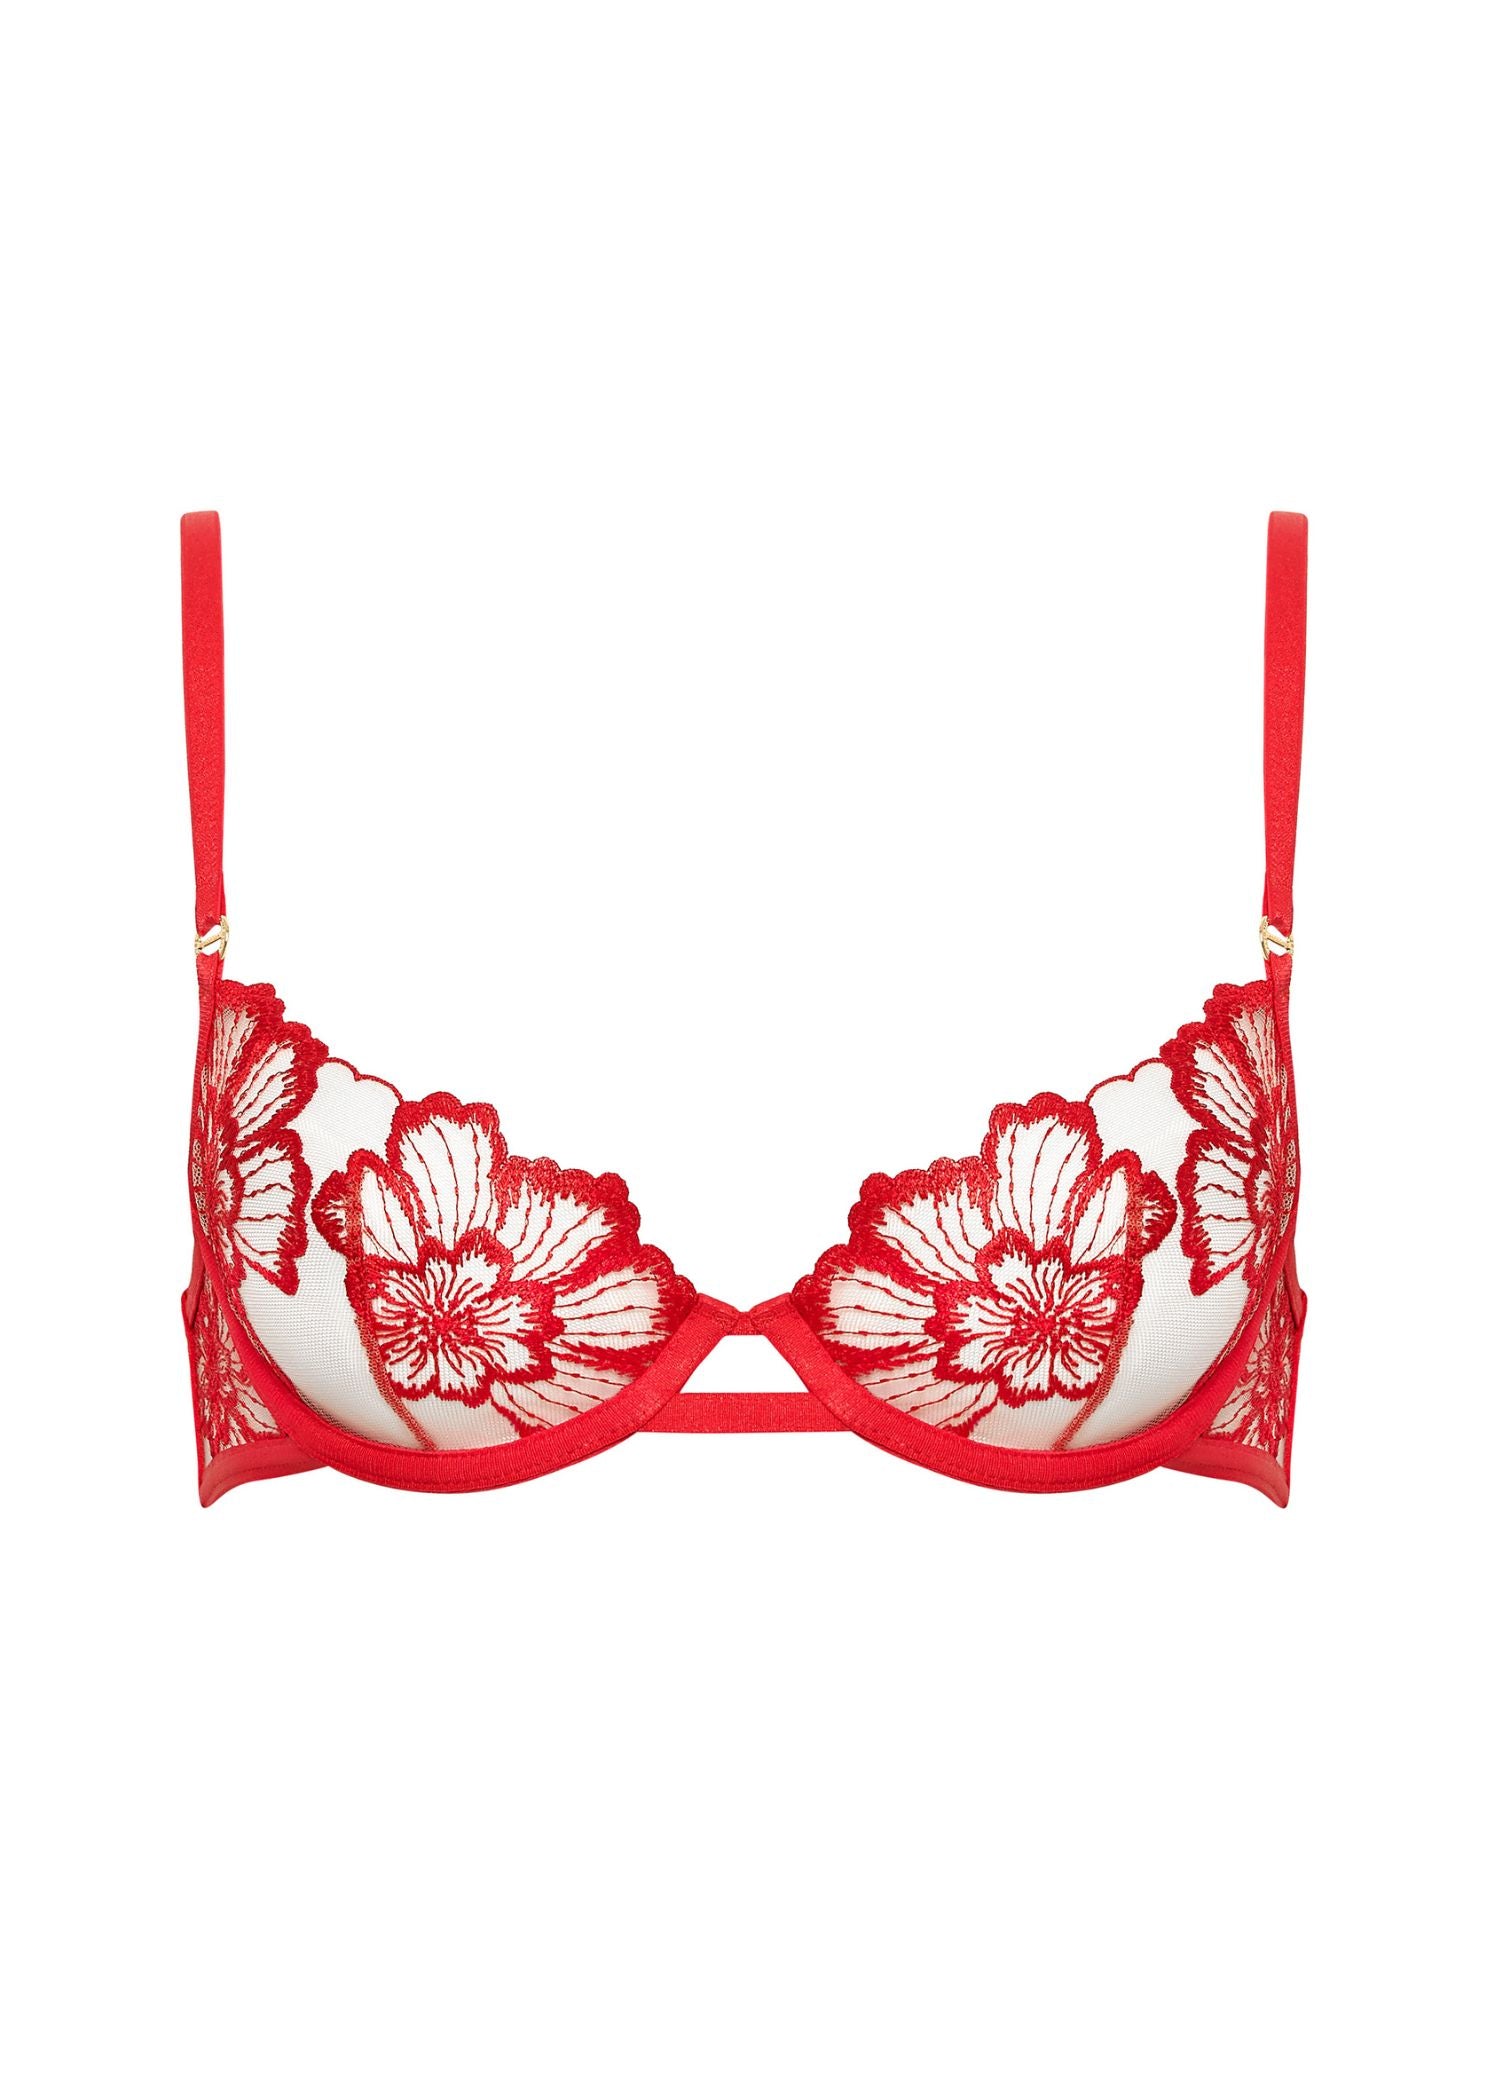 Bluebella Pride Carmen lace lingerie set in red